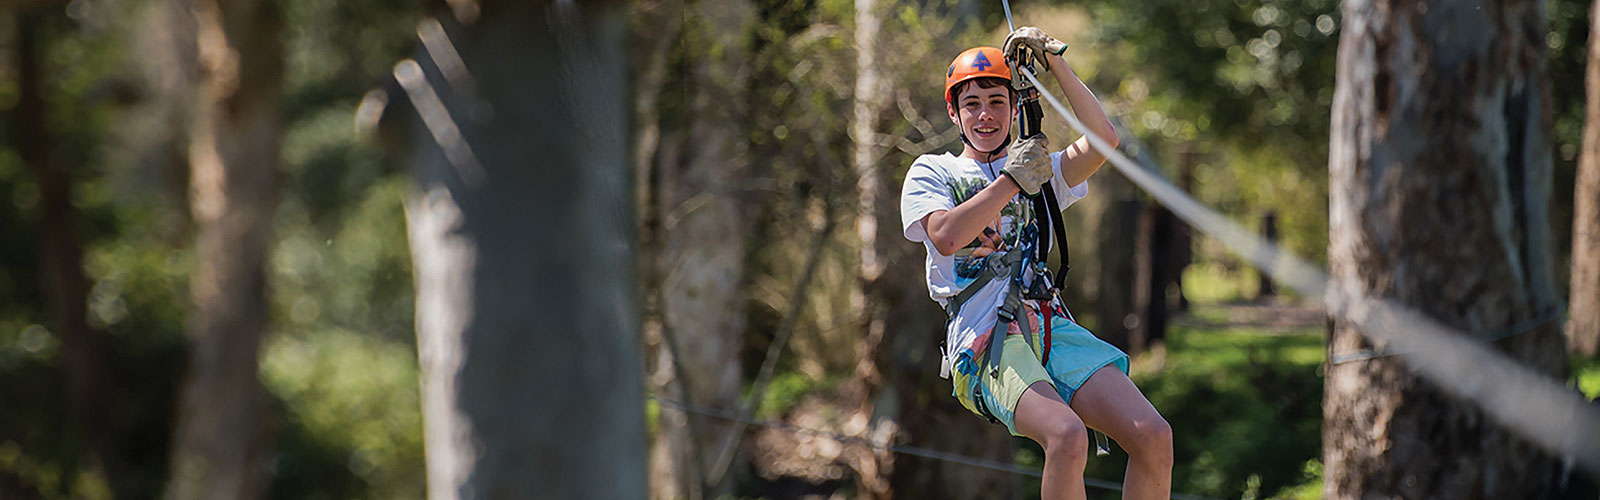 Treetops Adventure Yarramundi High Ropes Course